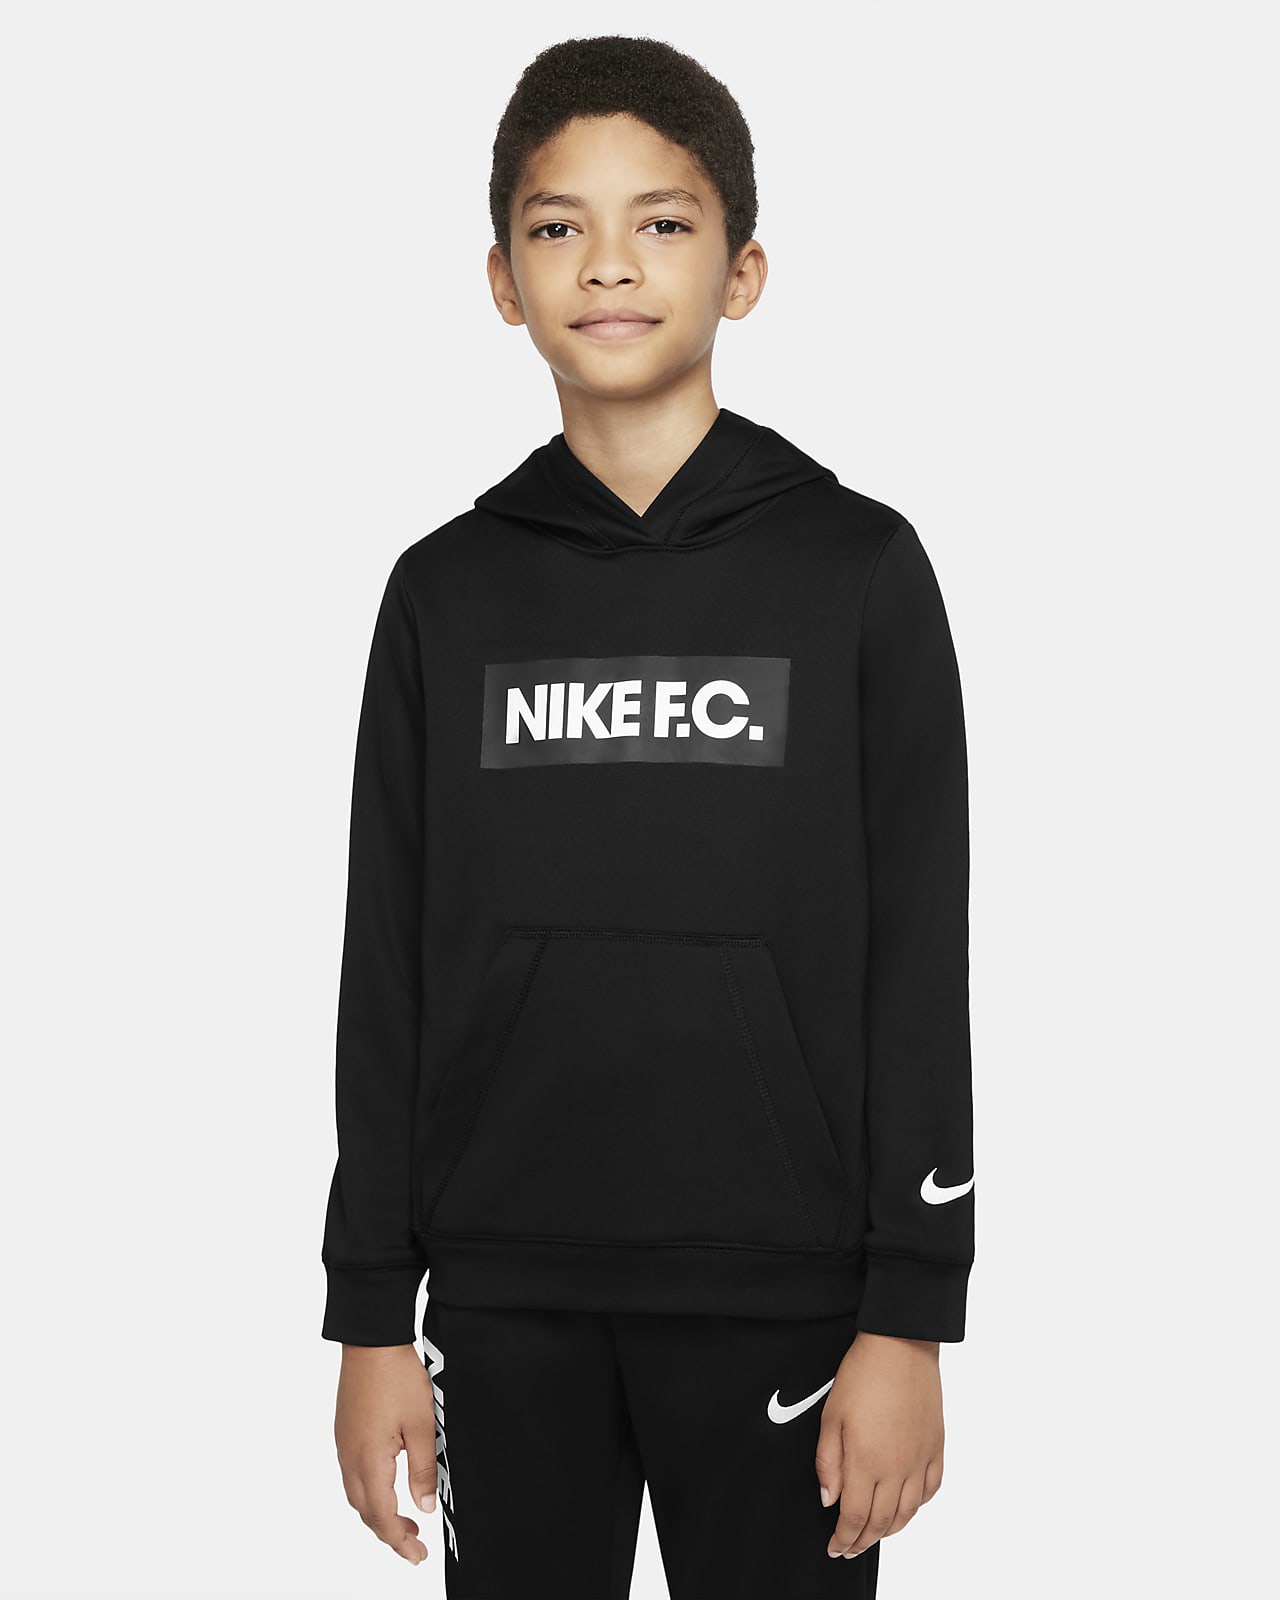 Sudadera gorro de para talla Nike F.C.. Nike.com